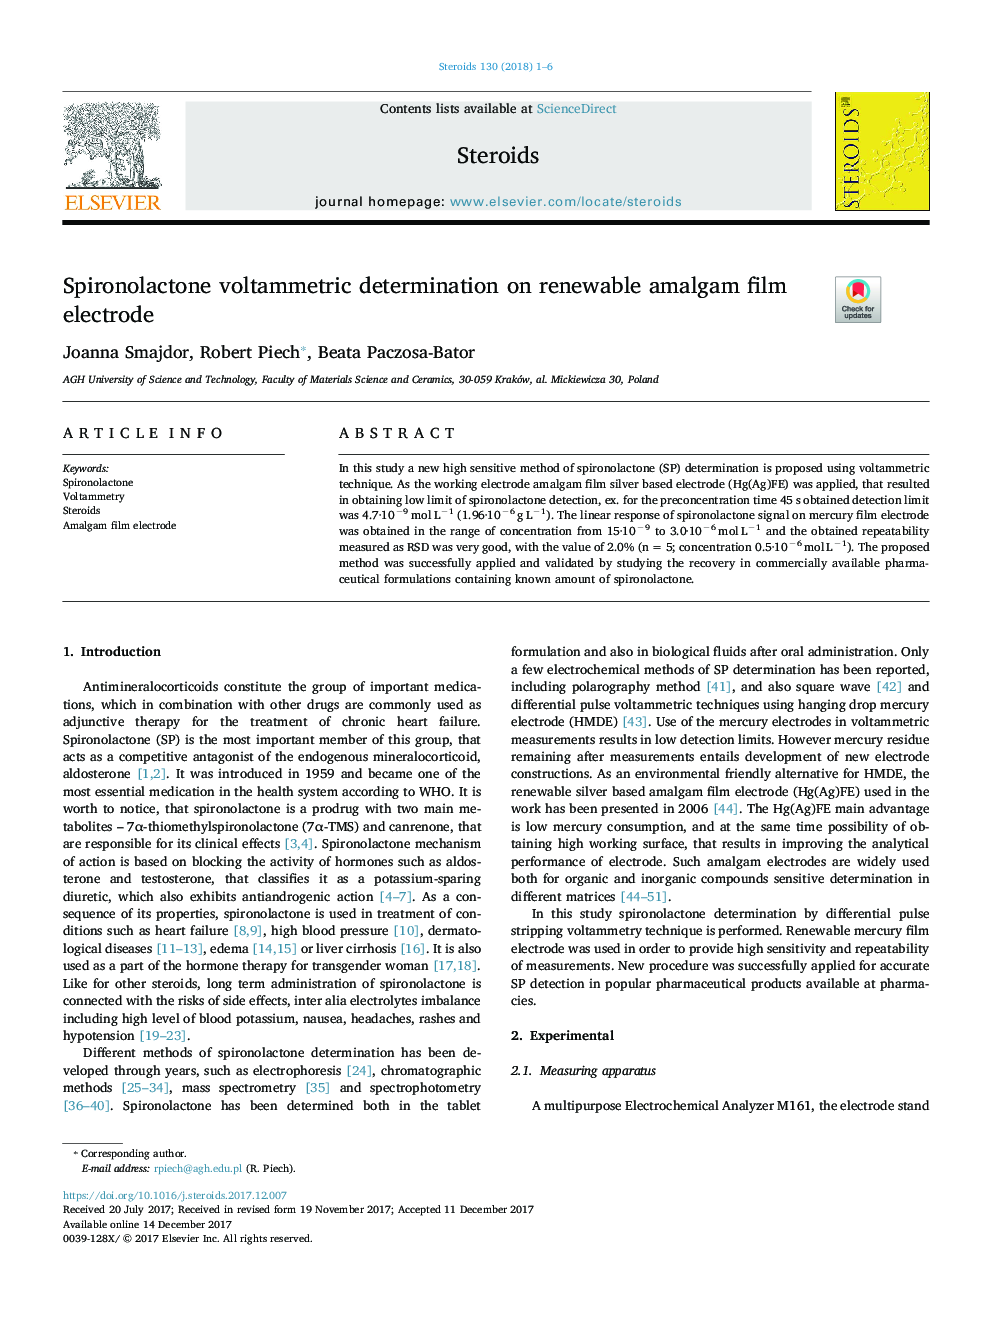 Spironolactone voltammetric determination on renewable amalgam film electrode